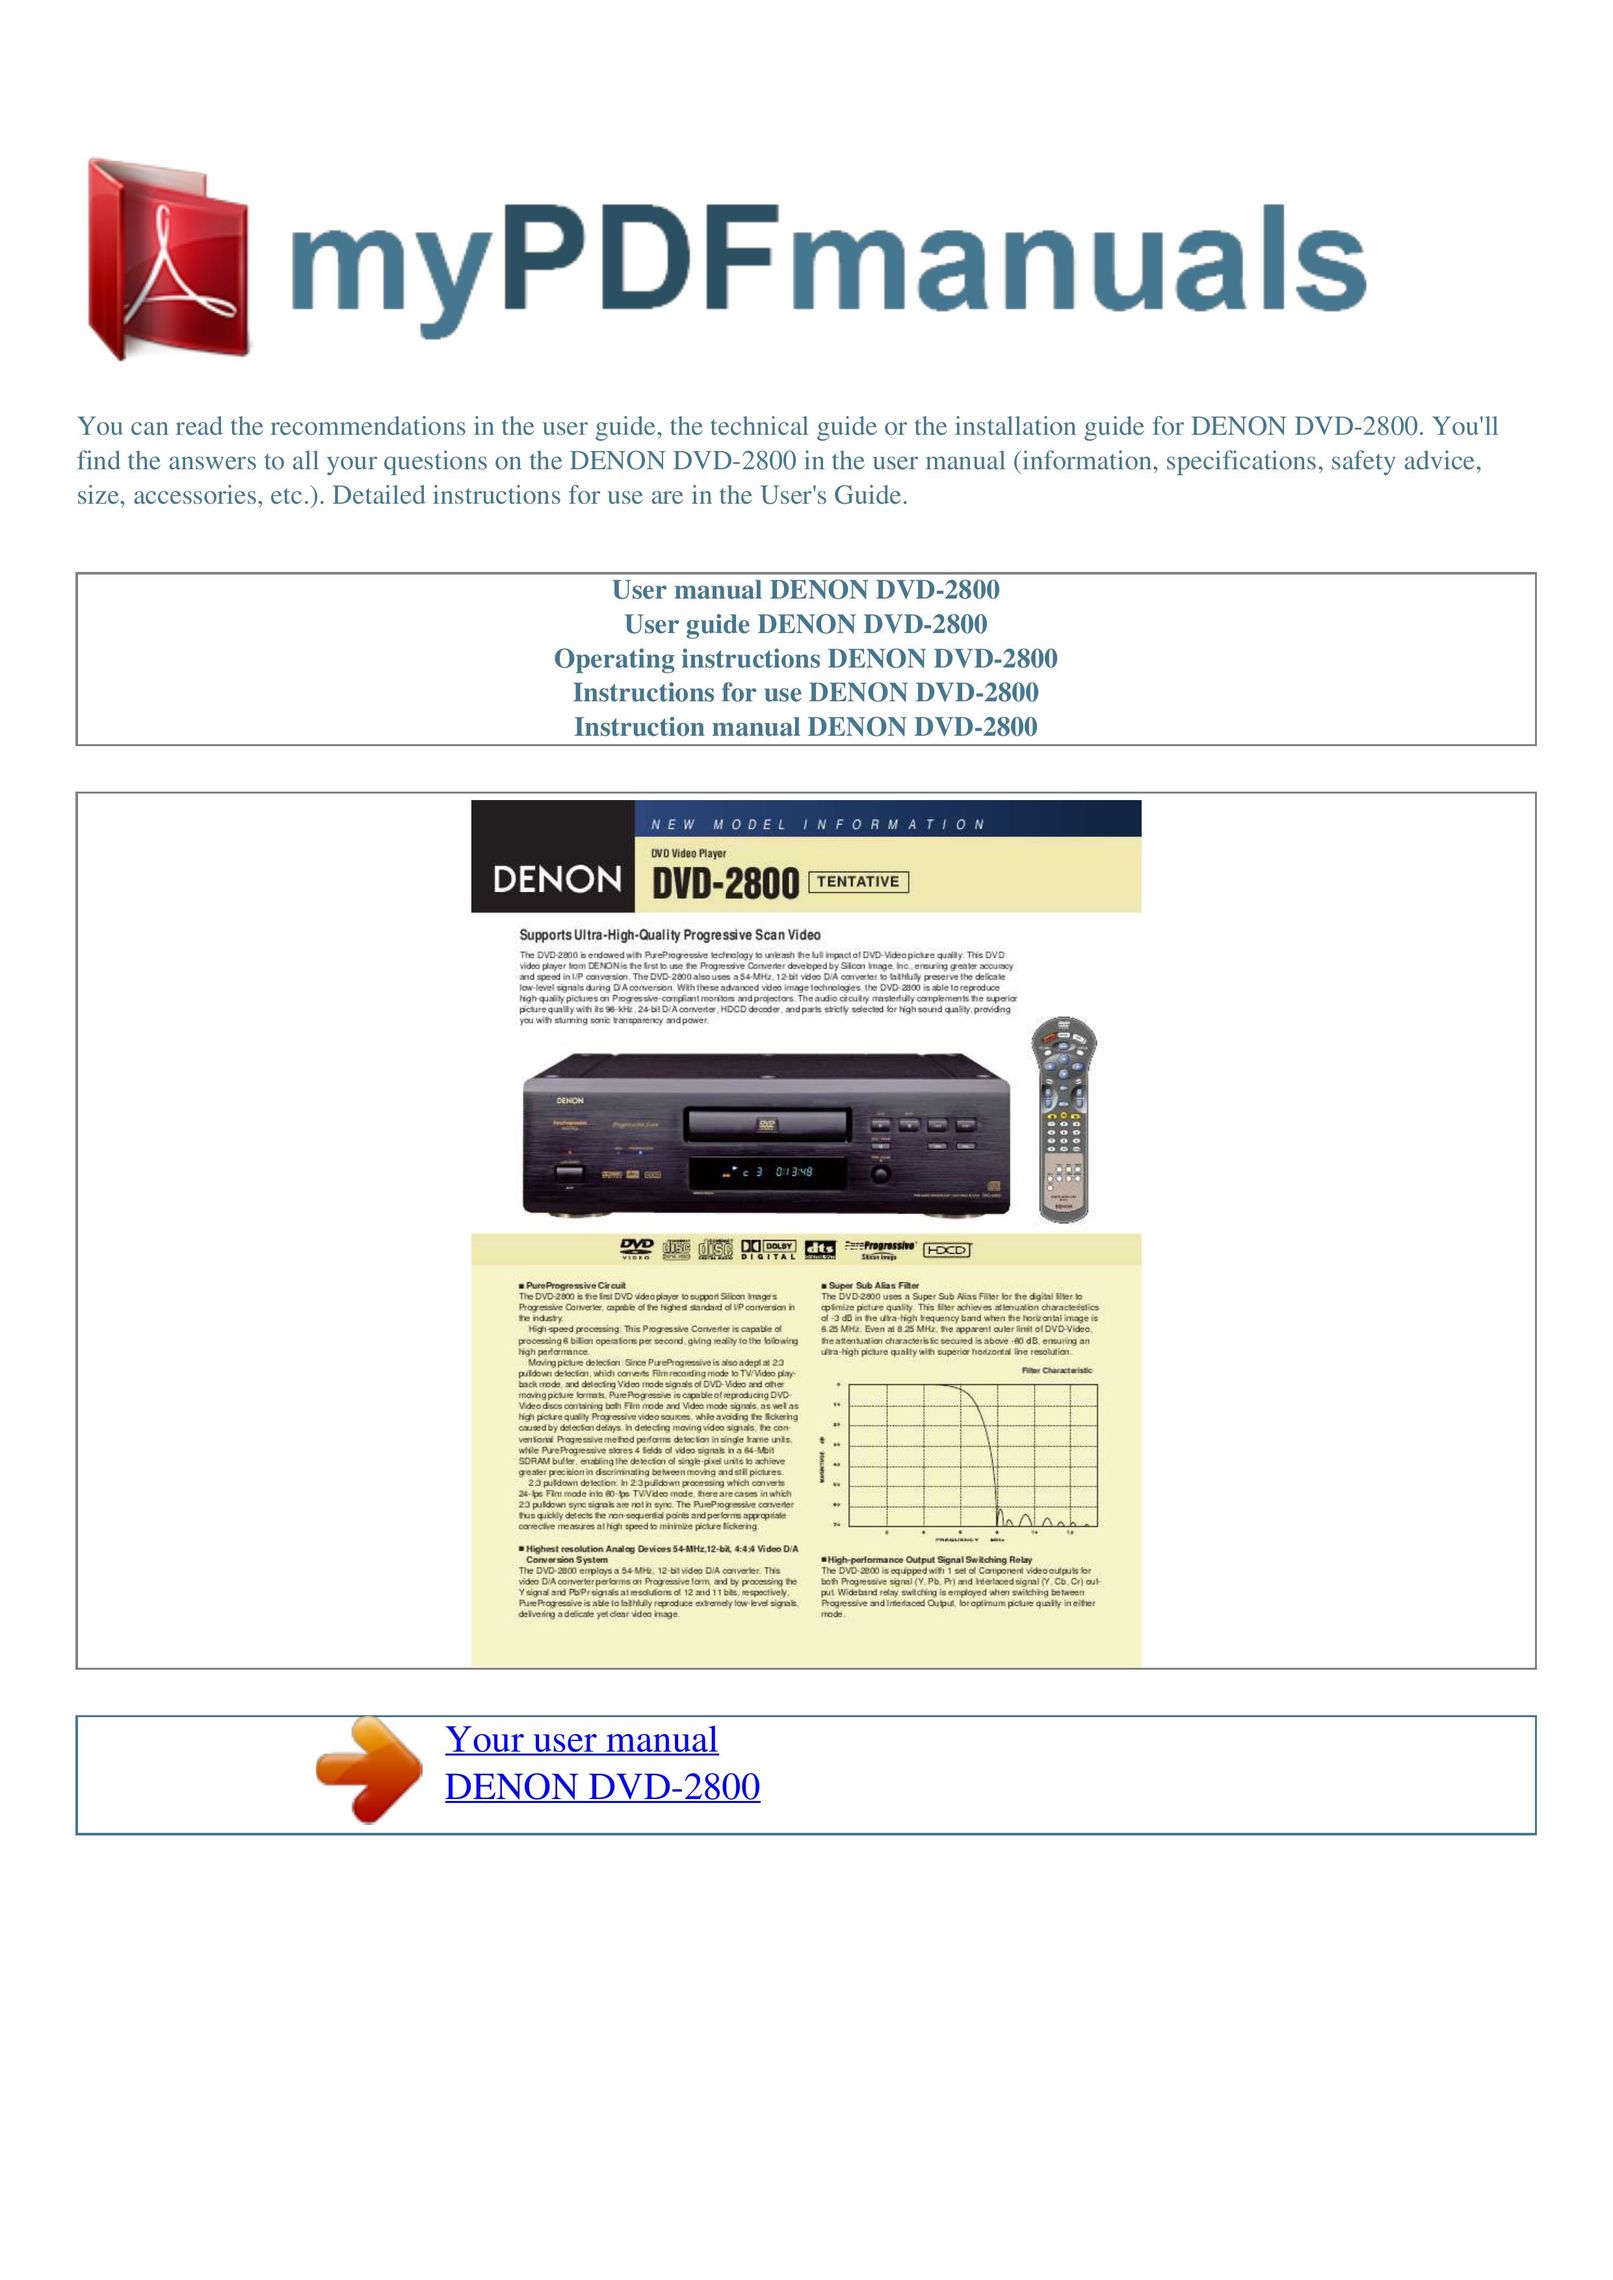 Denon DVD-2800 DVD Player User Manual